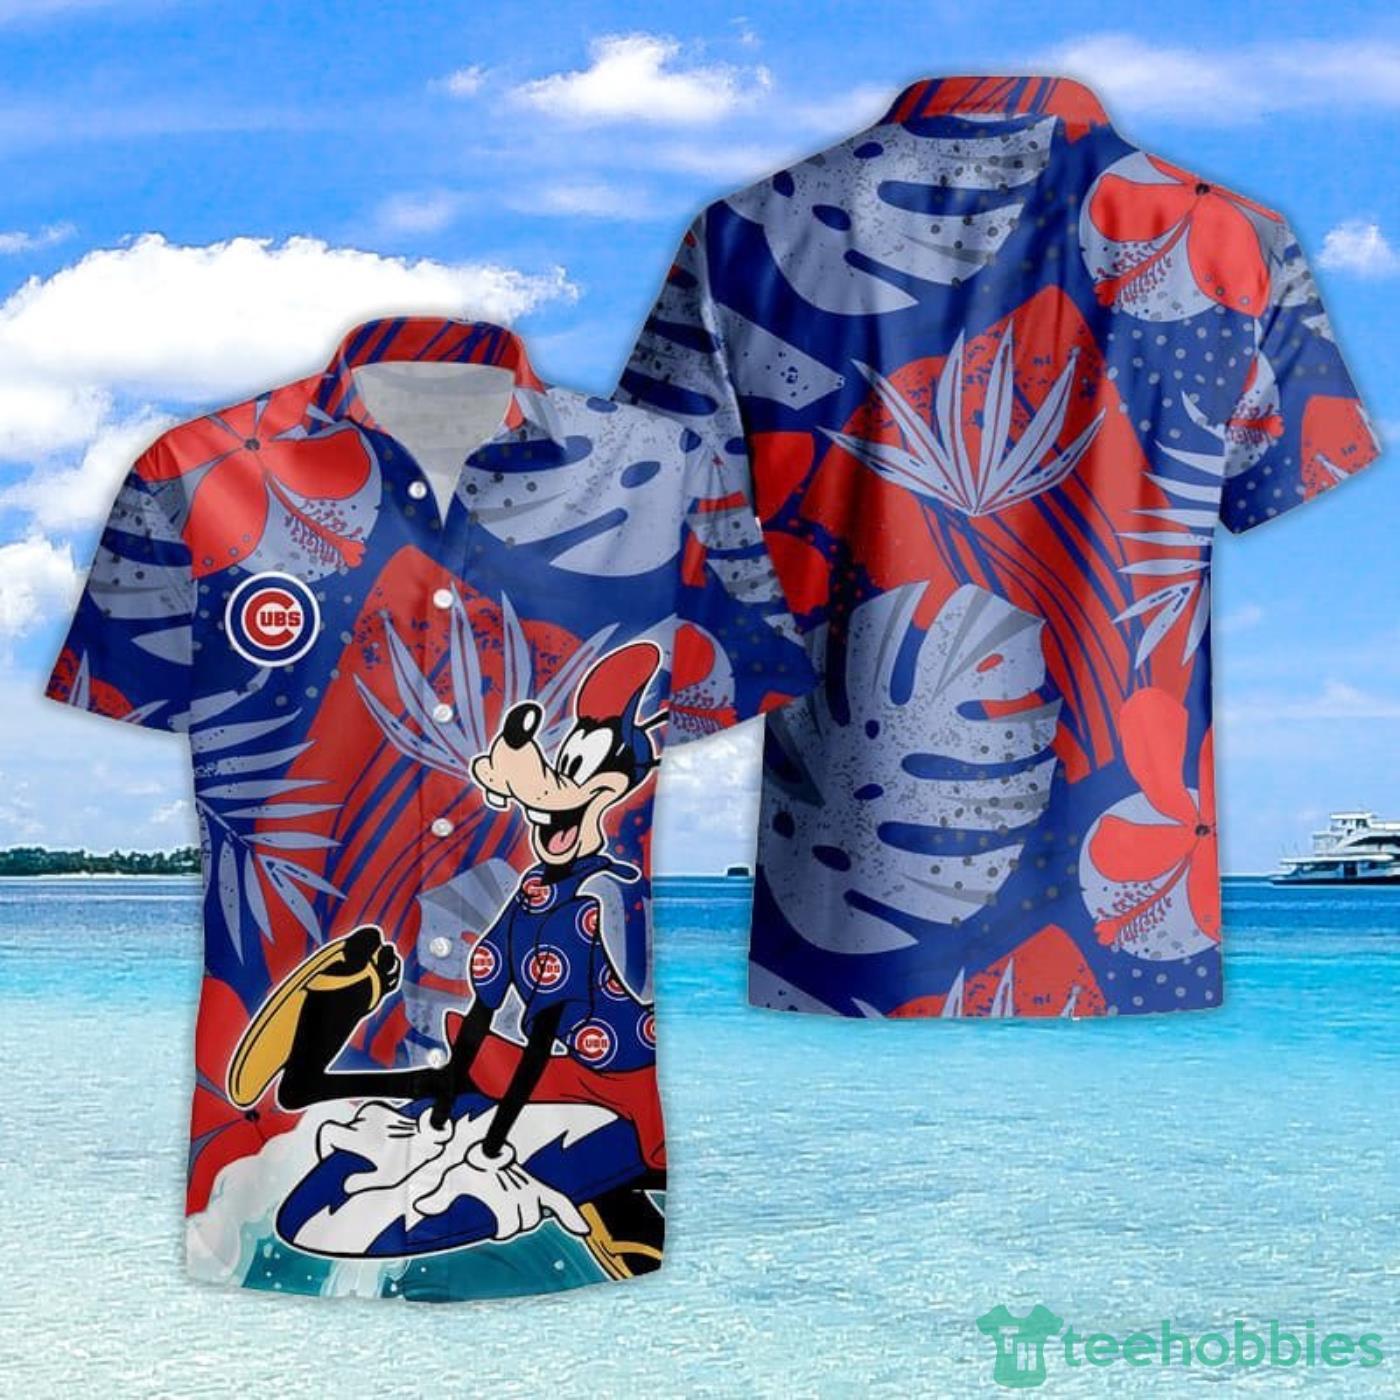 BEST MLB Chicago Cubs 3D All Over Printed Hawaiian Shirt, Short